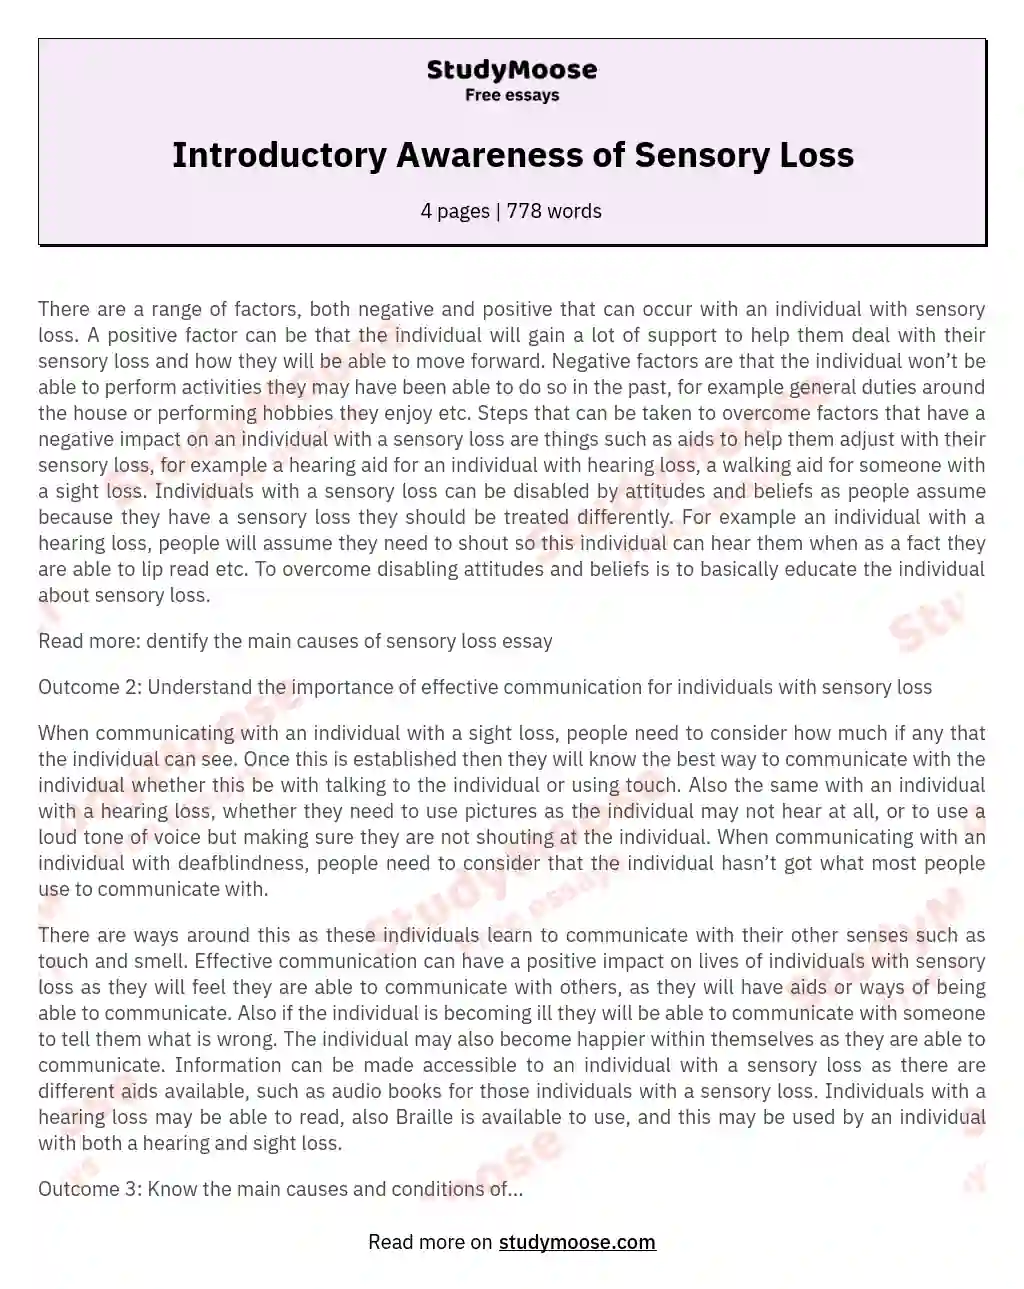 Introductory Awareness of Sensory Loss essay